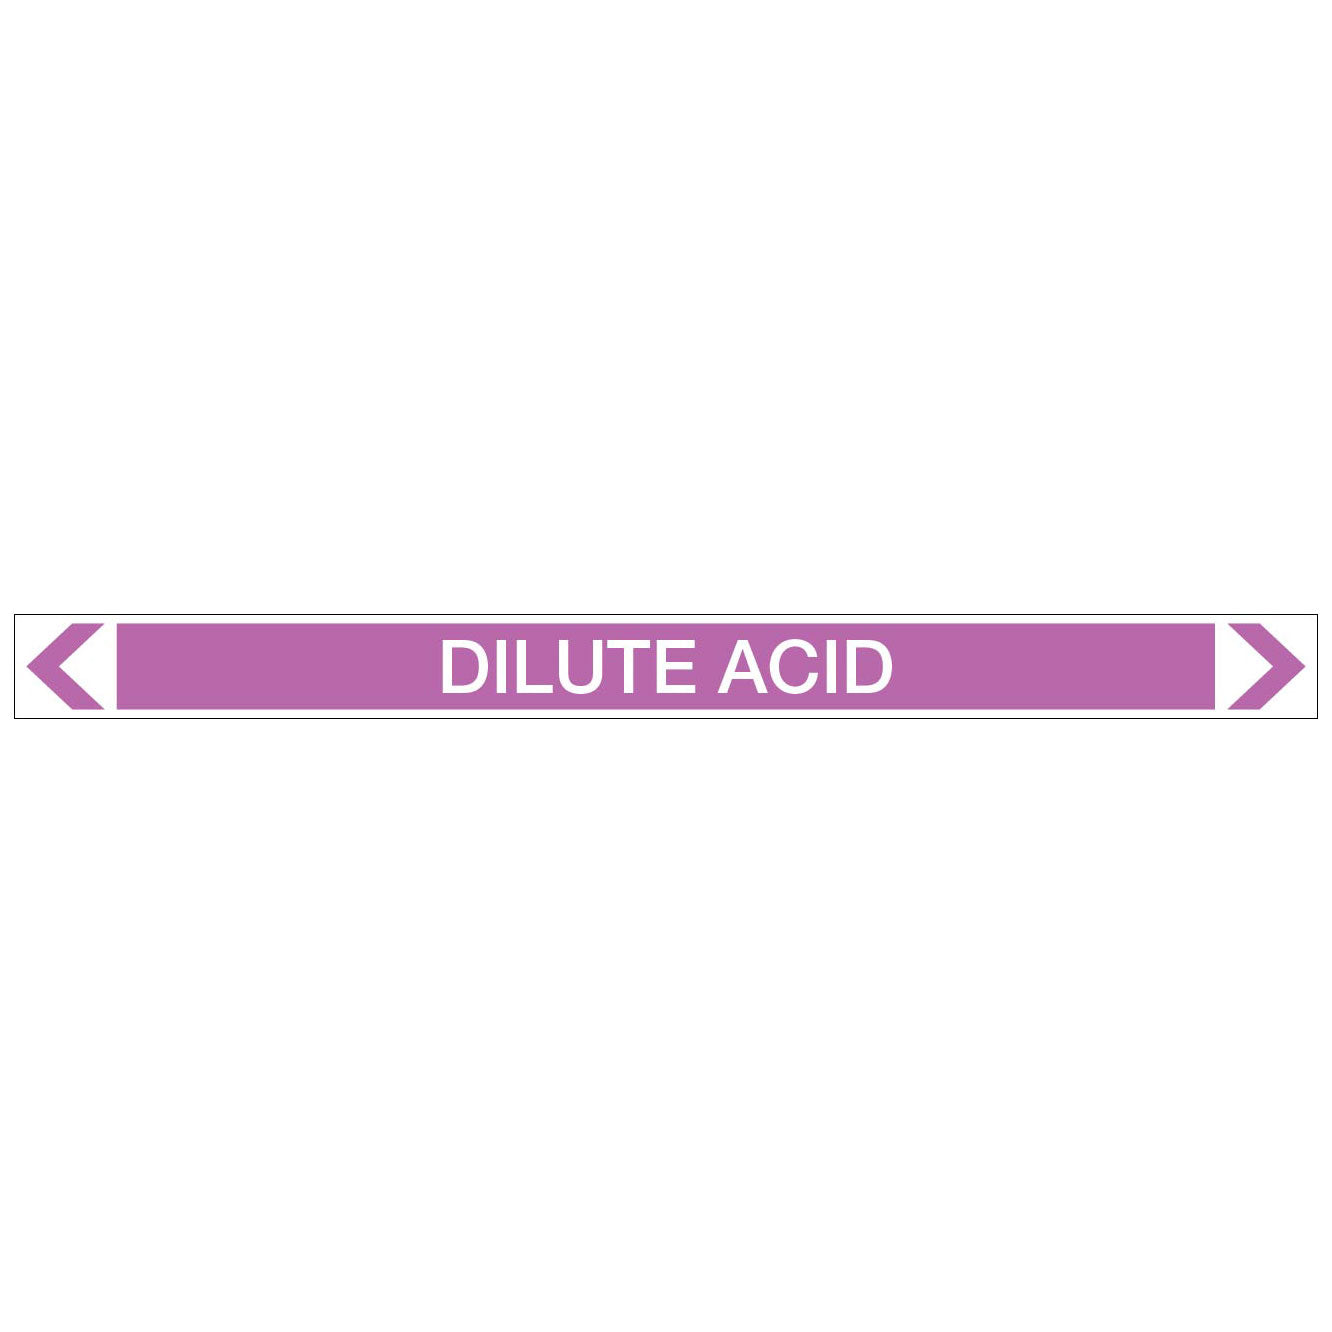 Alkalis / Acids - Dilute Acid - Pipe Marker Sticker